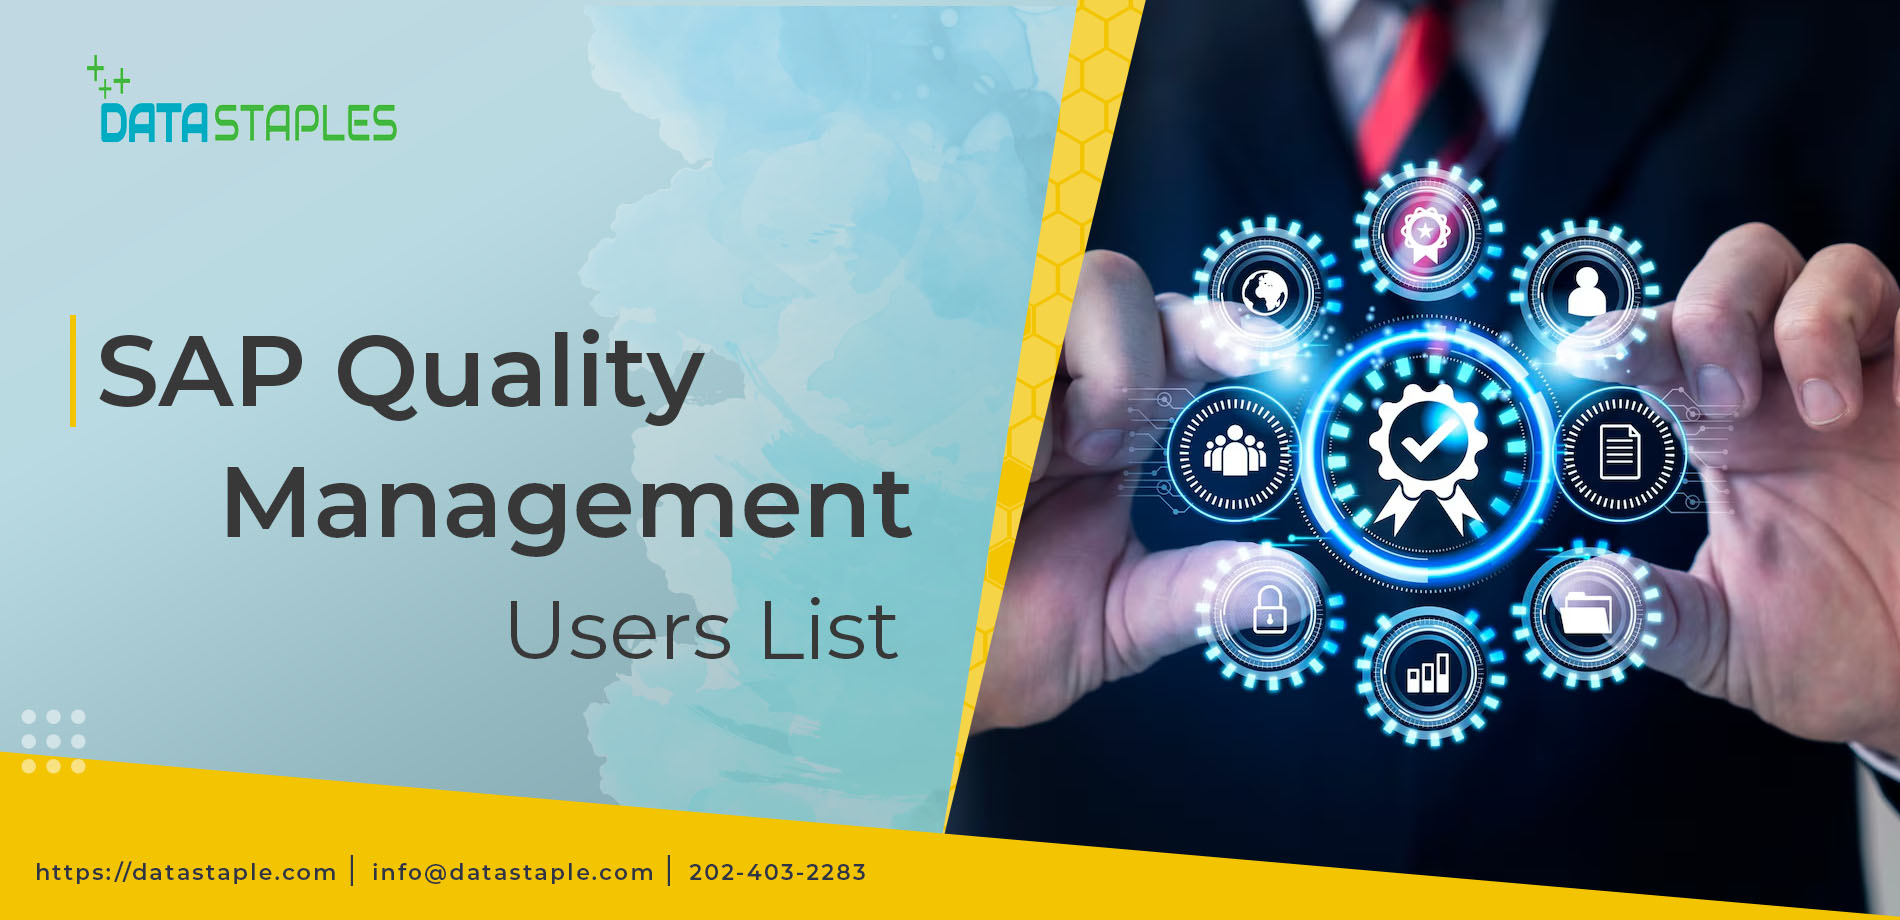 SAP Quality Management Users List | SAP Quality Management Customers List | DataStaples